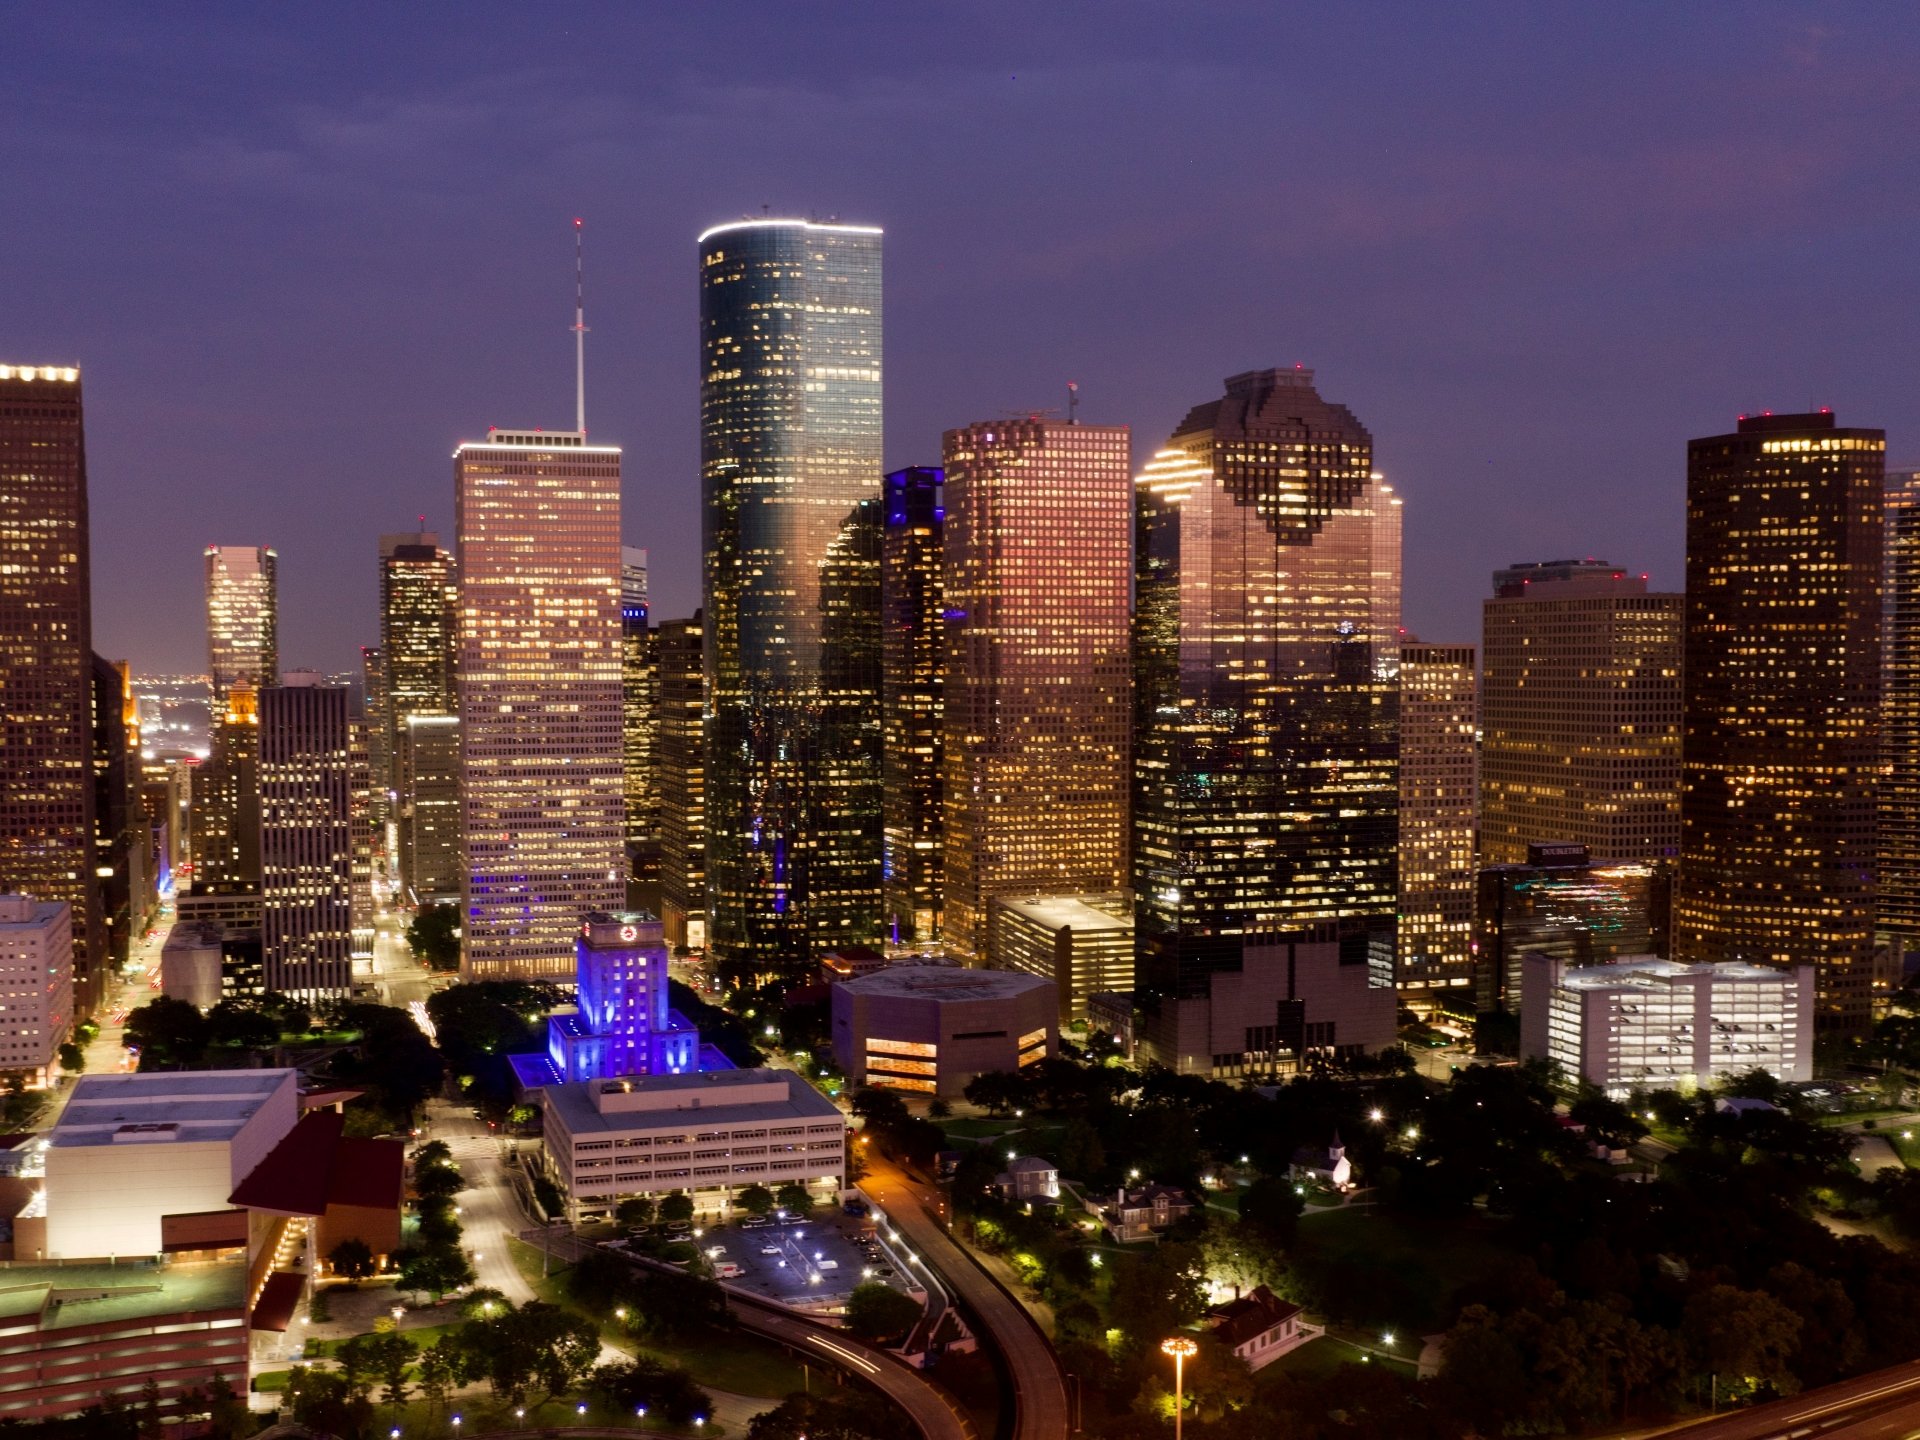 Skyline of Houston at night.